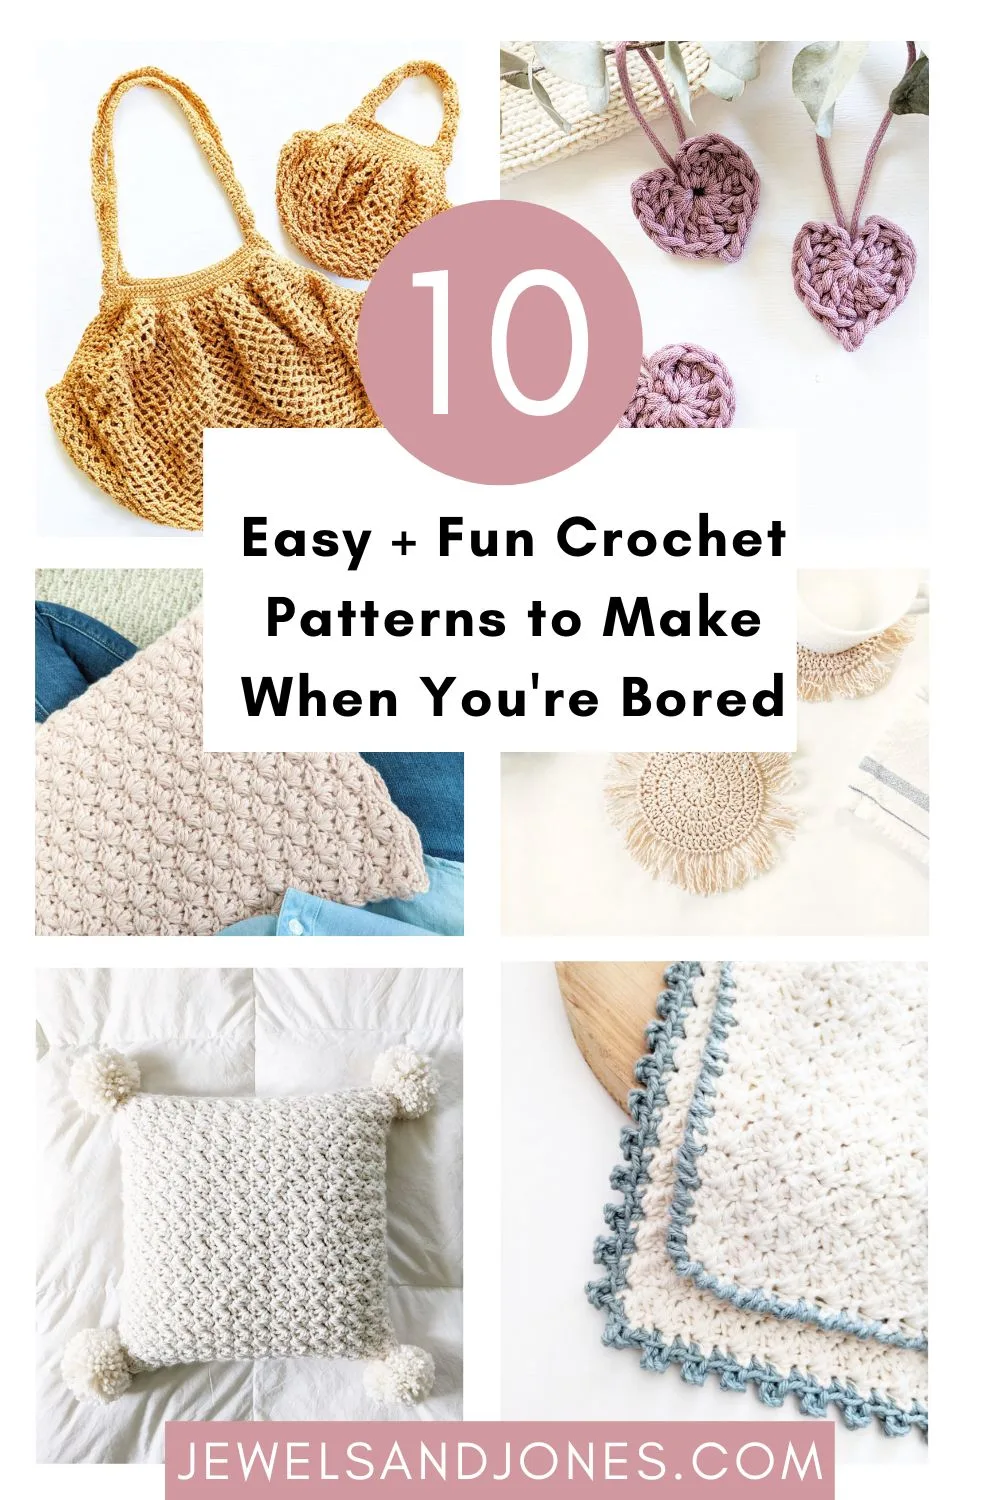 Crochet You!